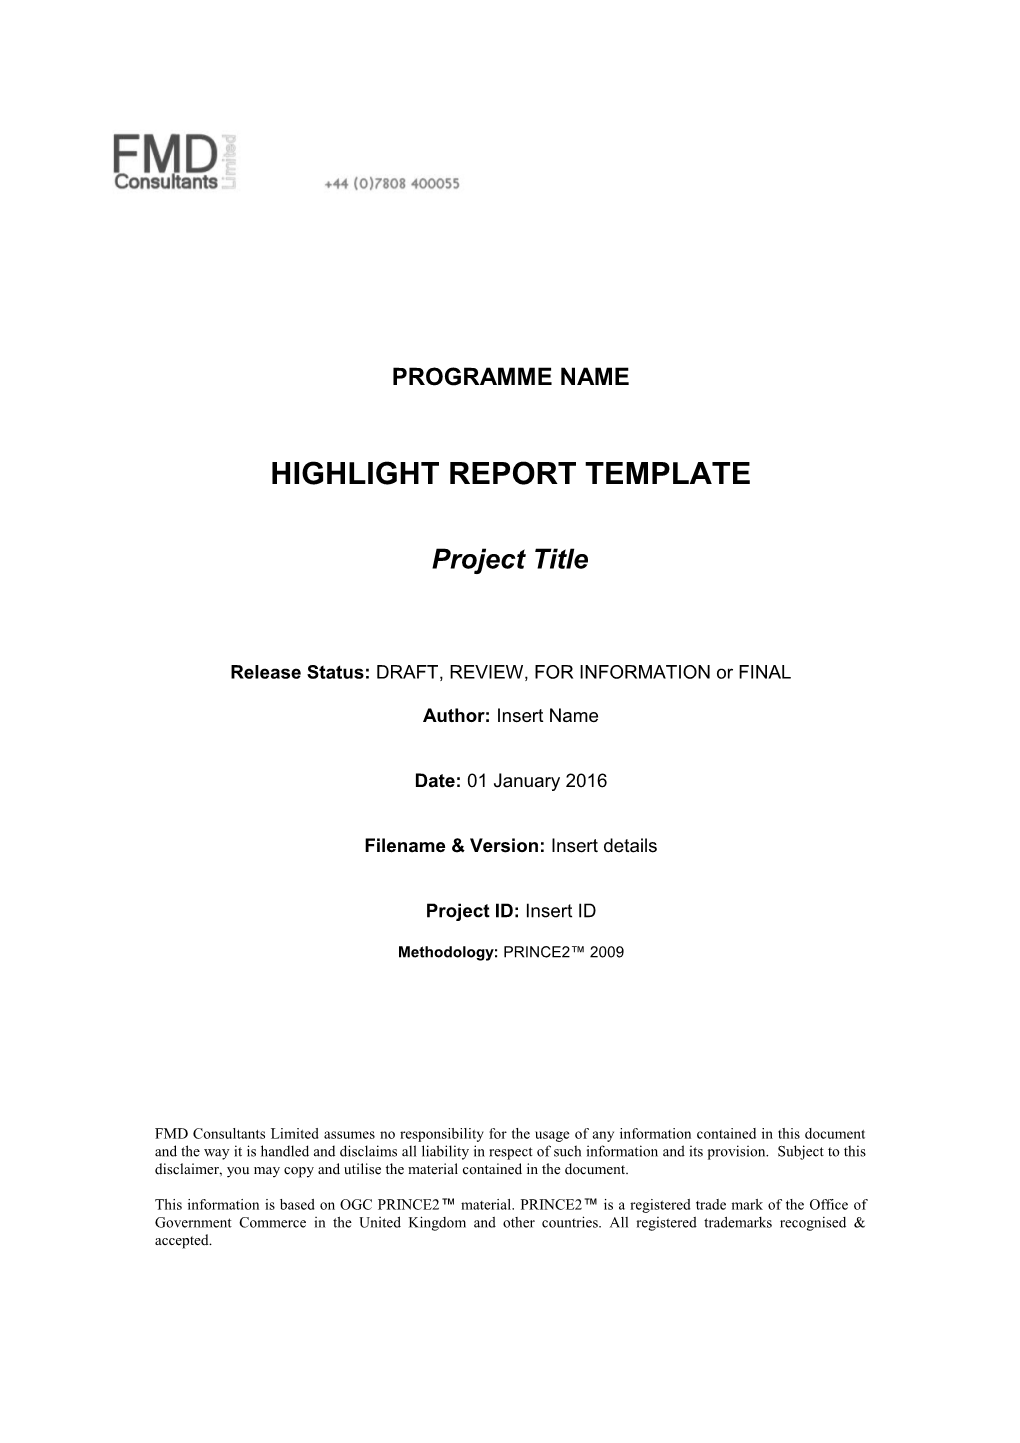 Highlight Report Template